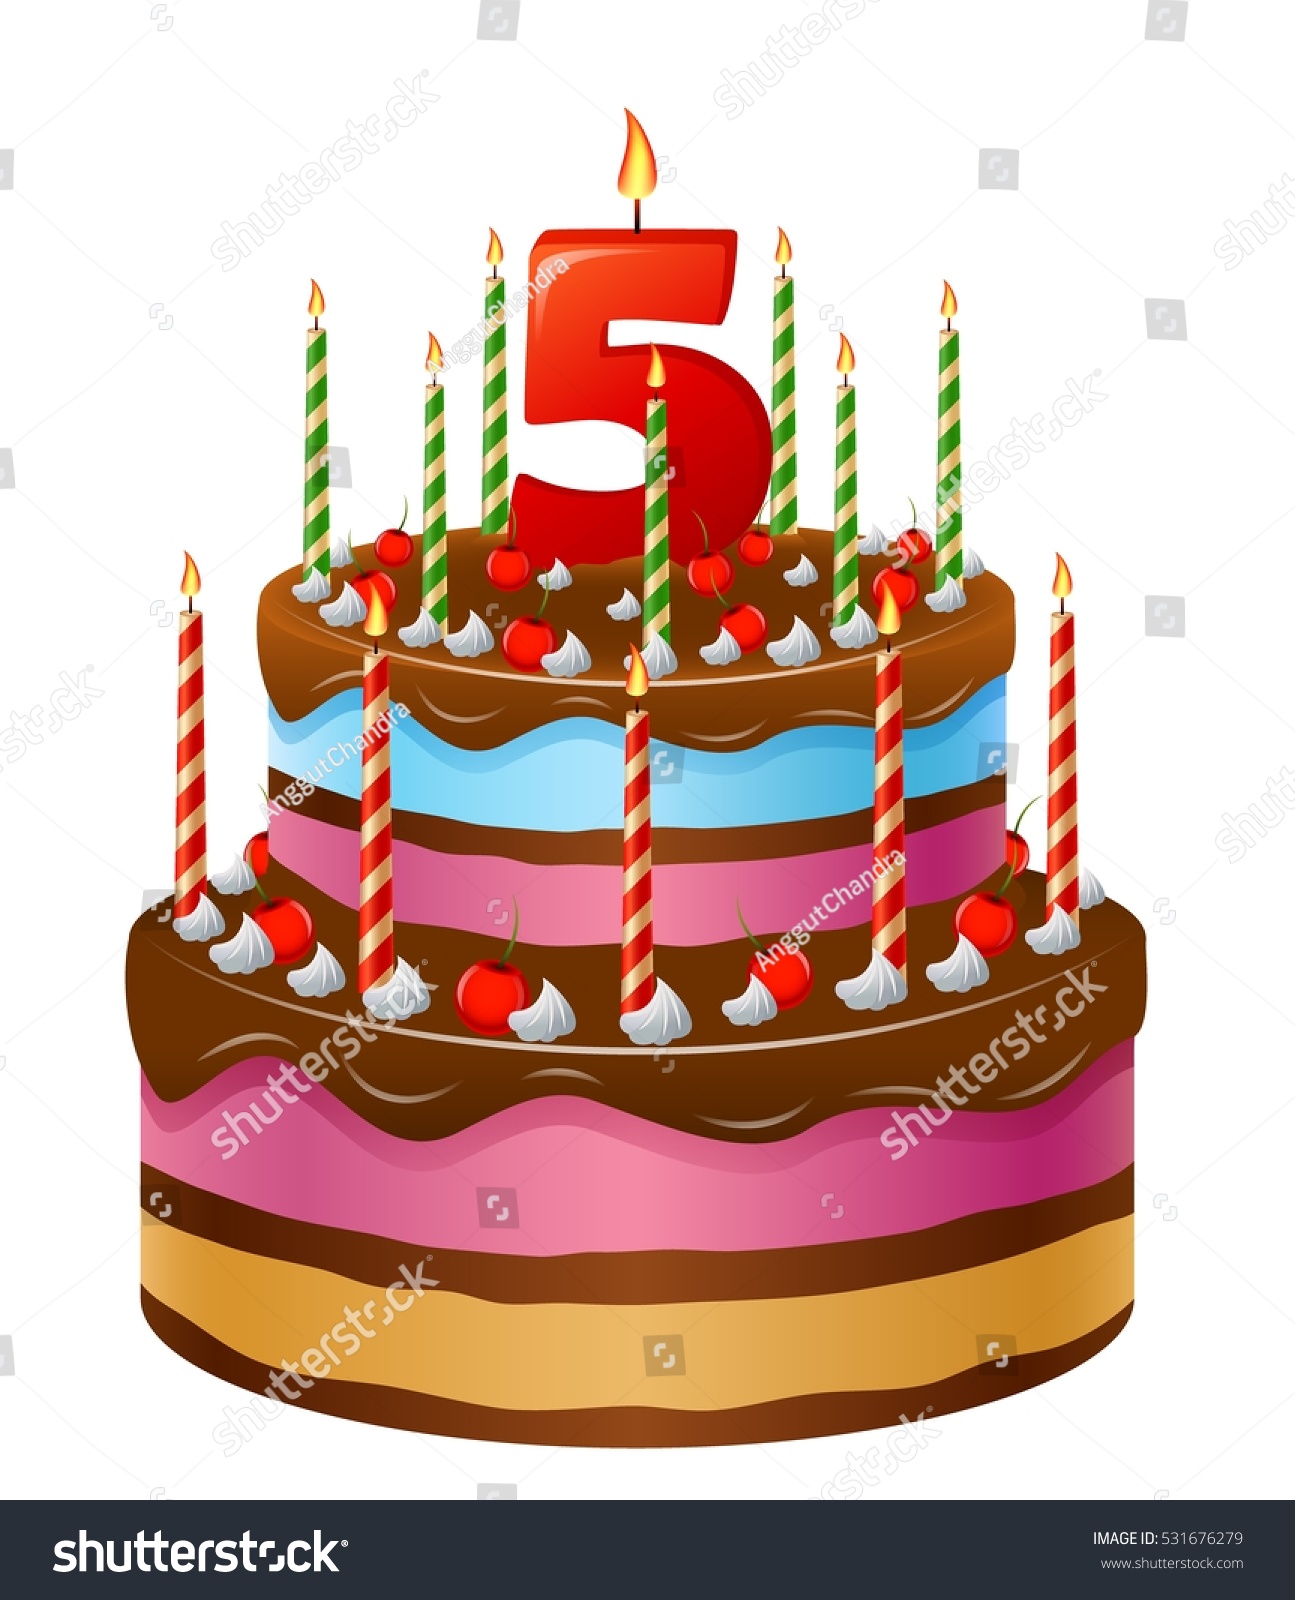 stock-vector-happy-birthday-cake-numbers-531676279.jpg